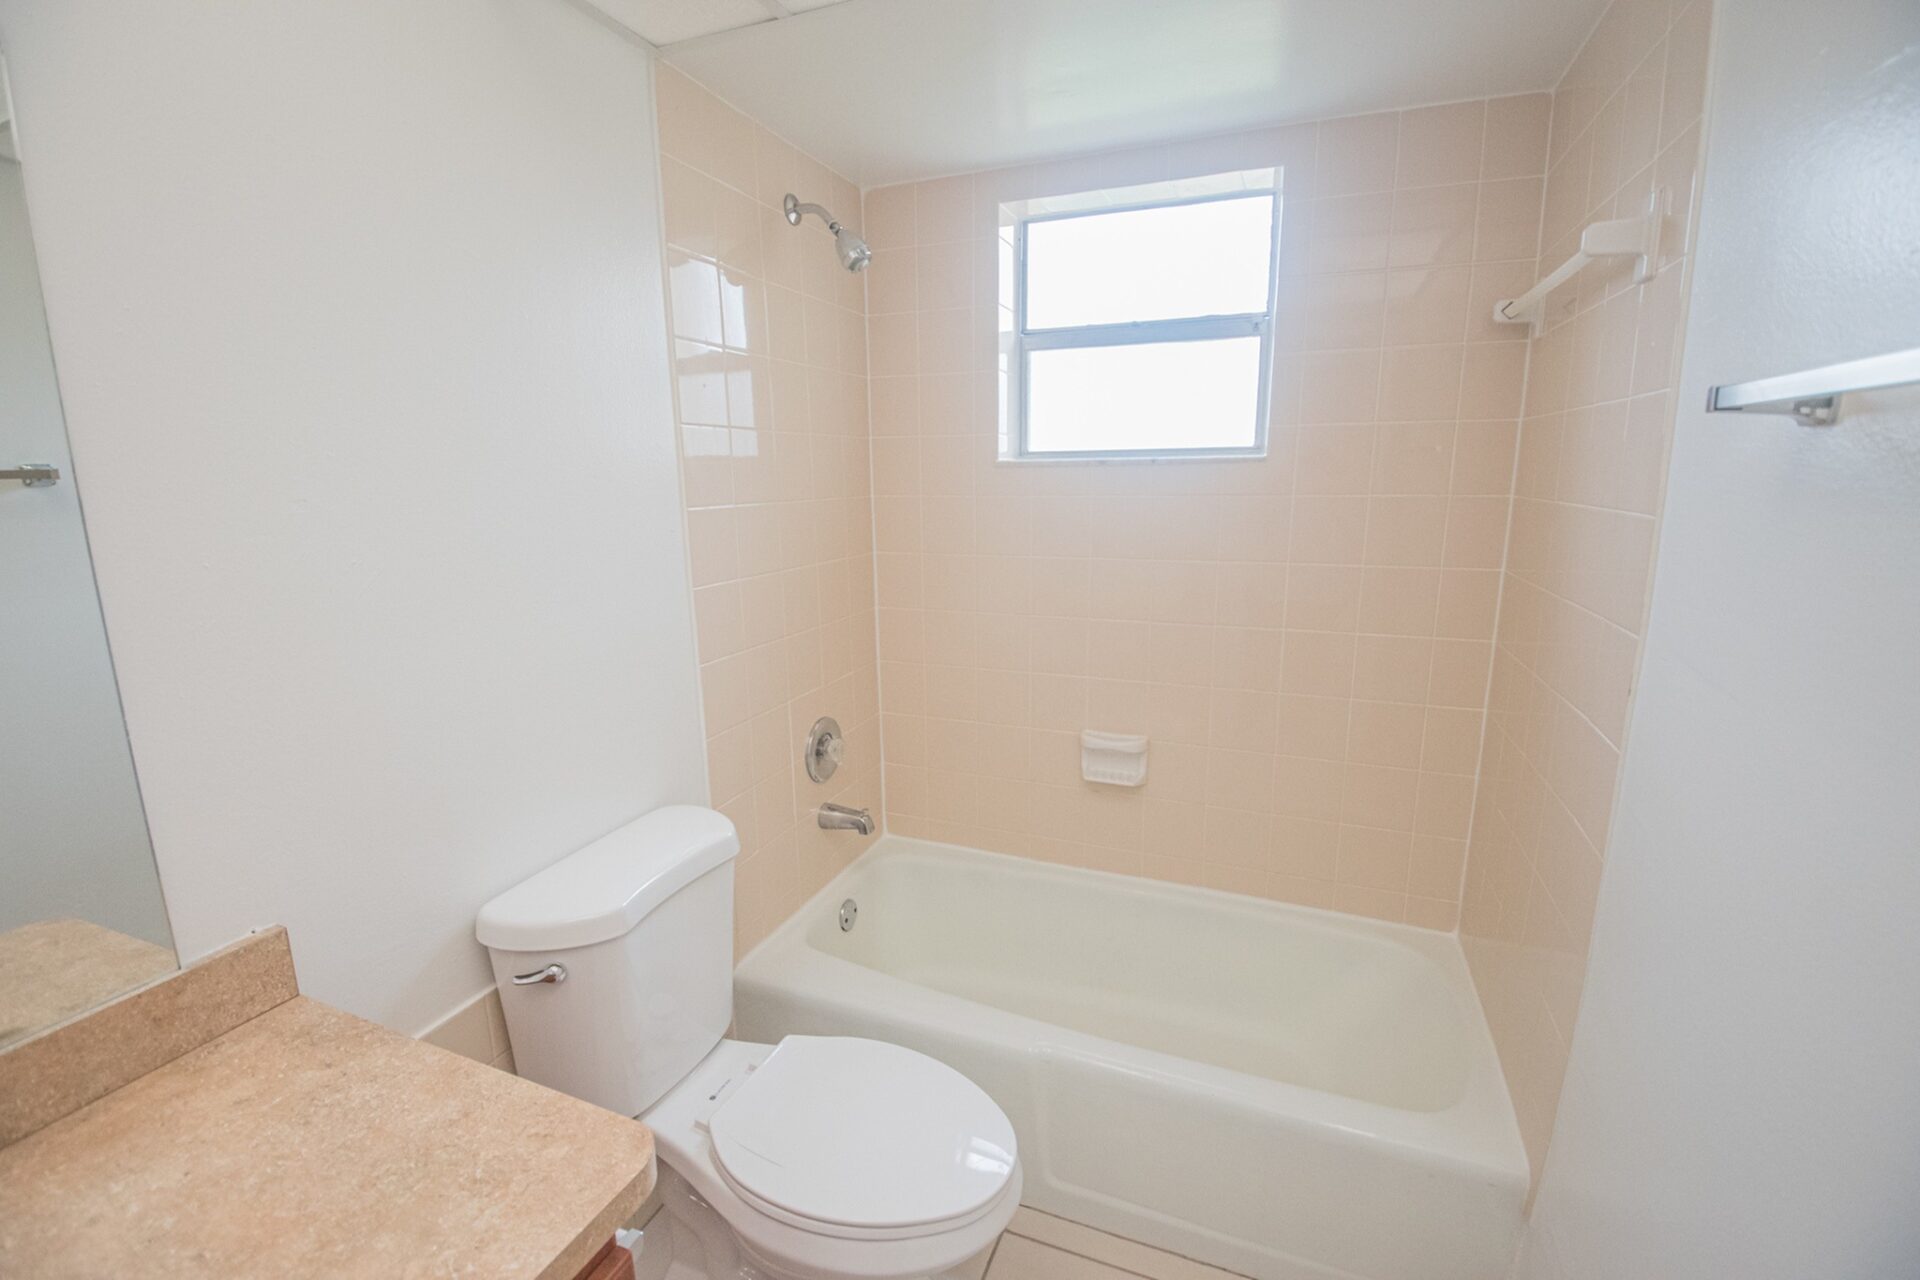 Bathtub and toilet inside a bathroom in an apartment at Green Briar West.